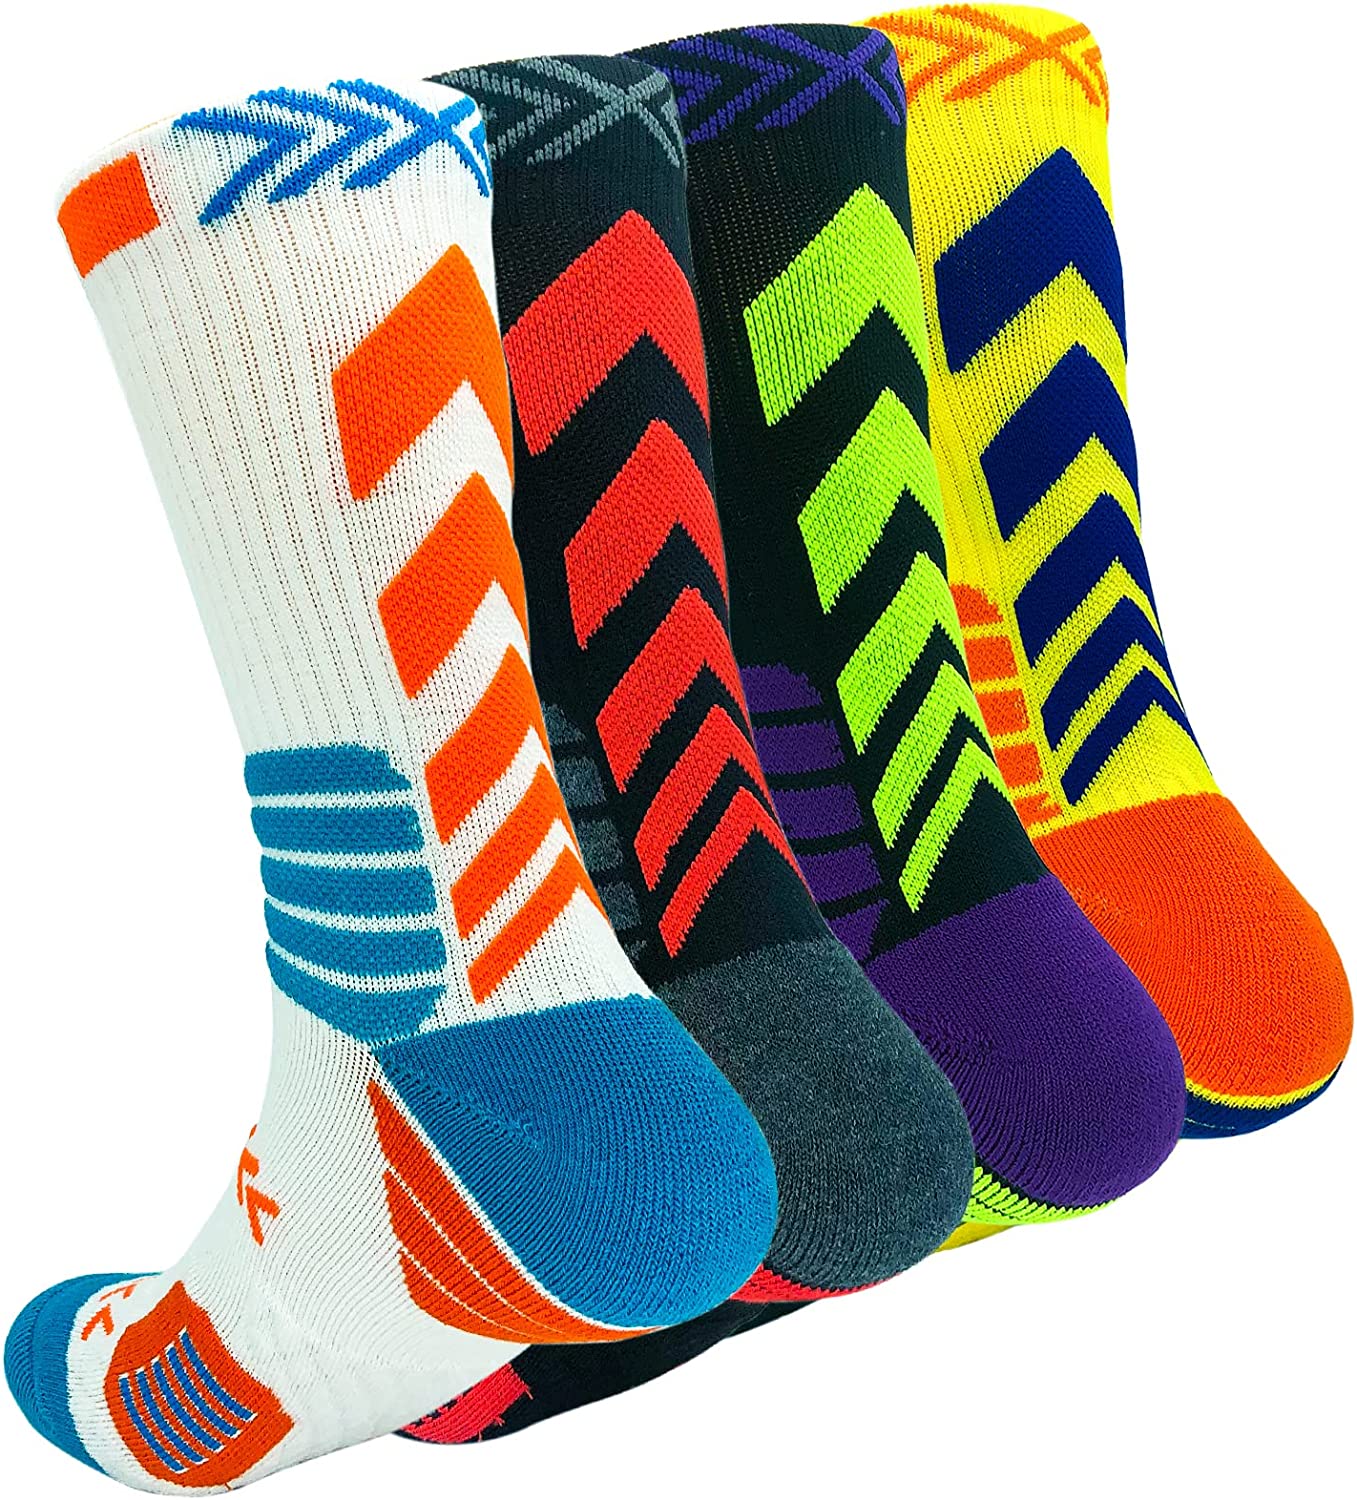 Basketball Socks Outdoor Athletic Crew Socks Thick Compression Long Running  Spor